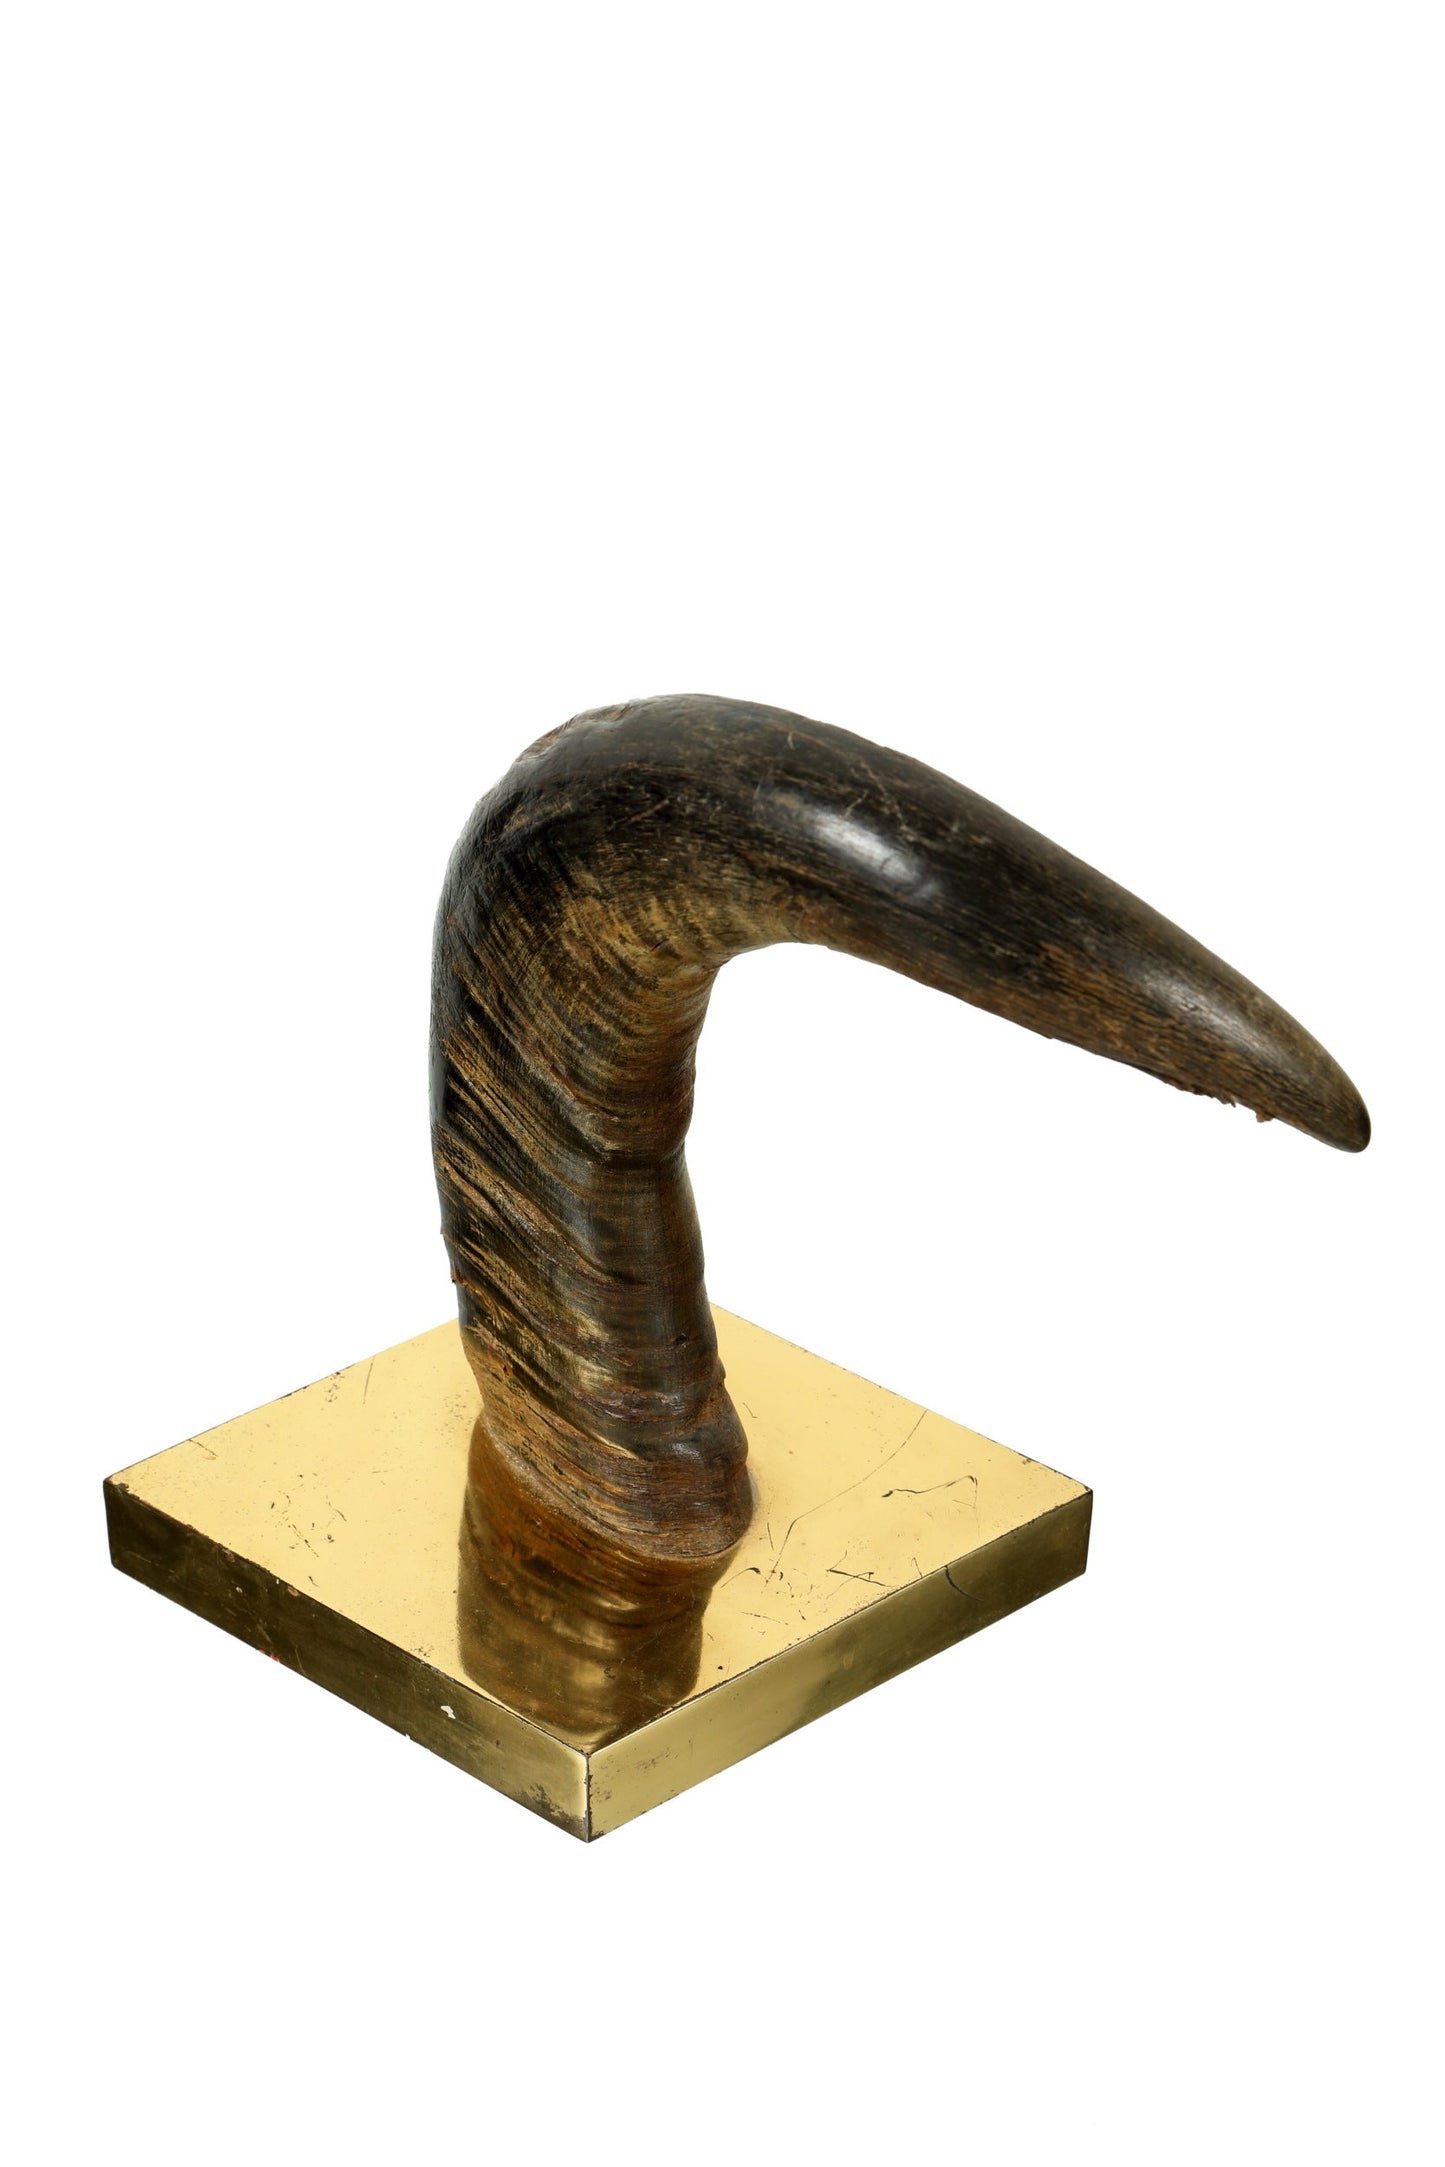 Gabriella Crespi horn sculpture from the 70s 